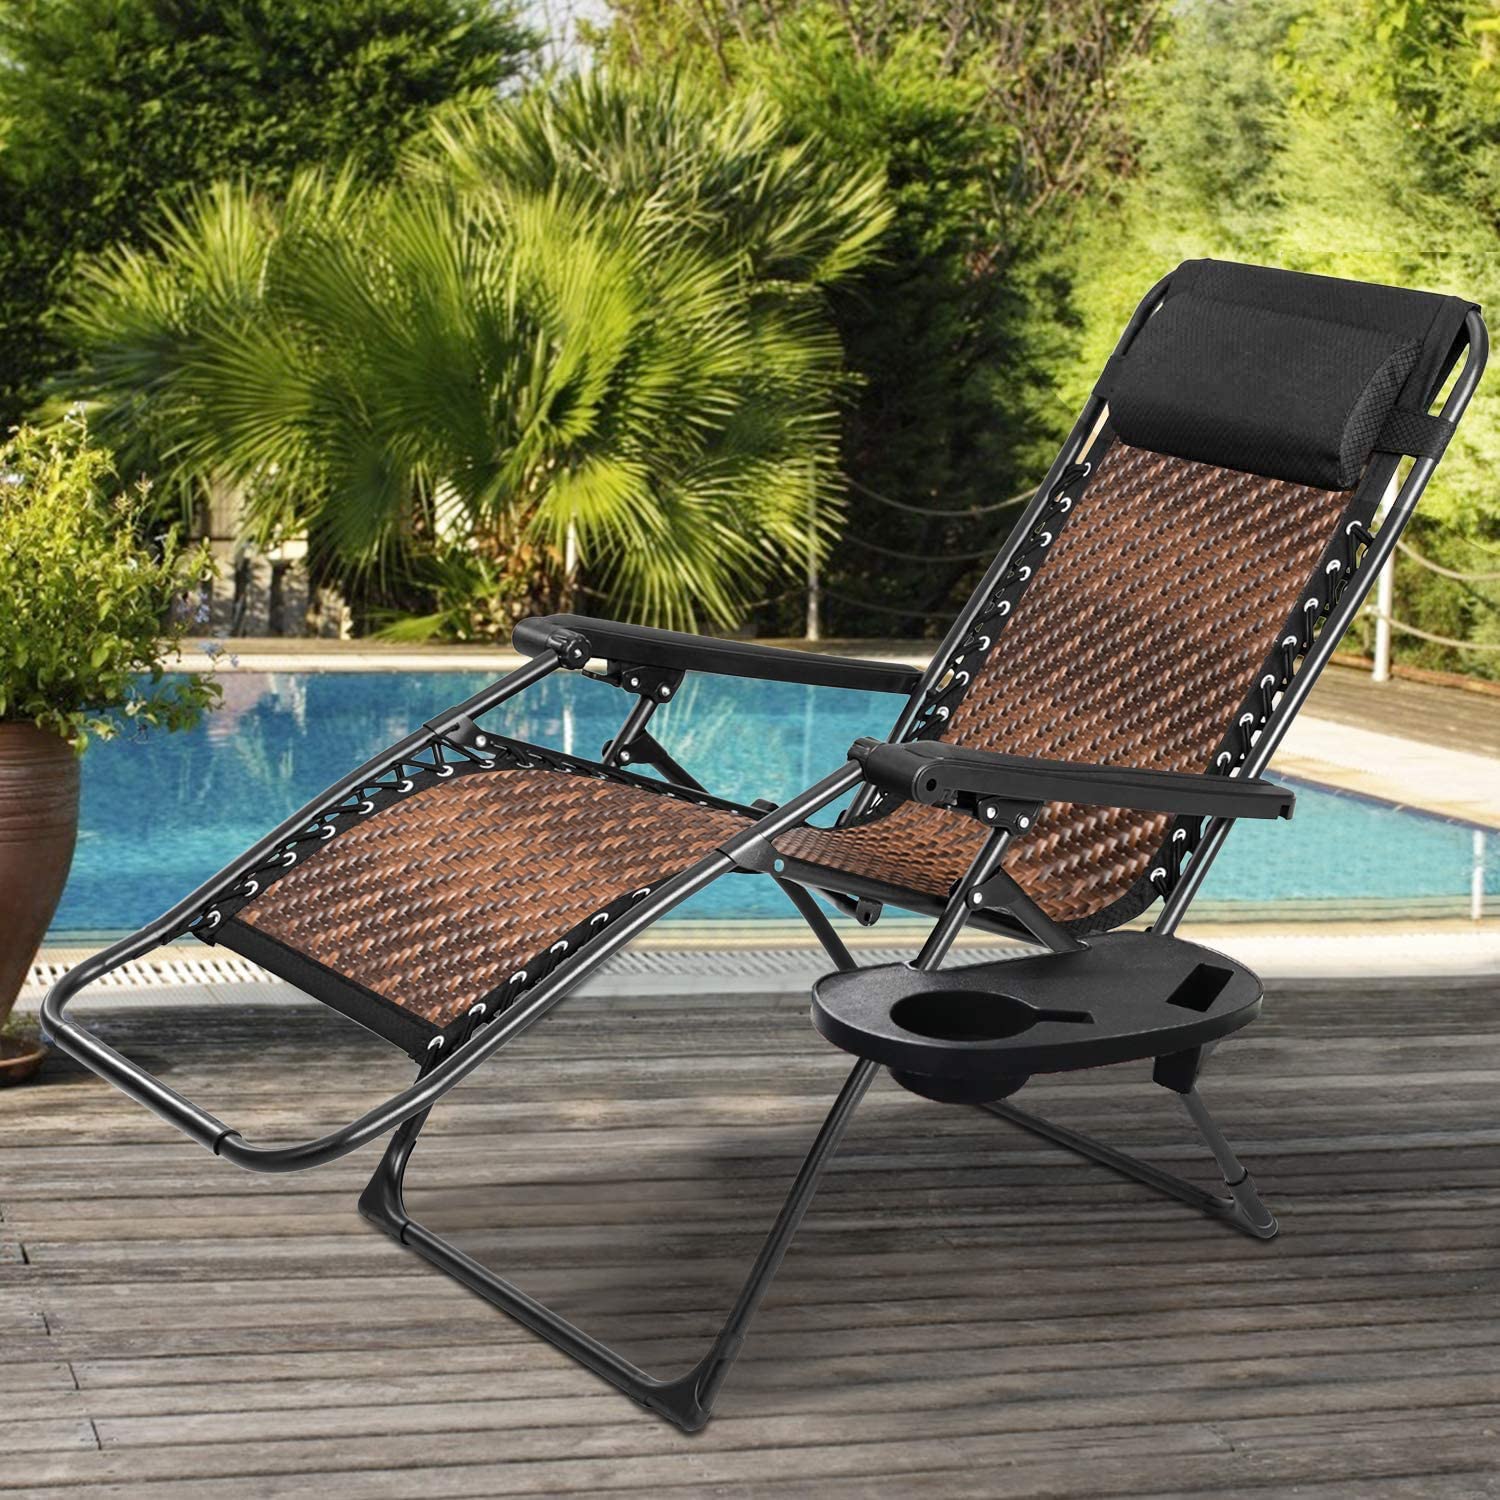 SOLAURA Outdoor Zero Gravity Lounge Chair Patio Adjustable Folding Wicker Recliner - Brown - image 4 of 6